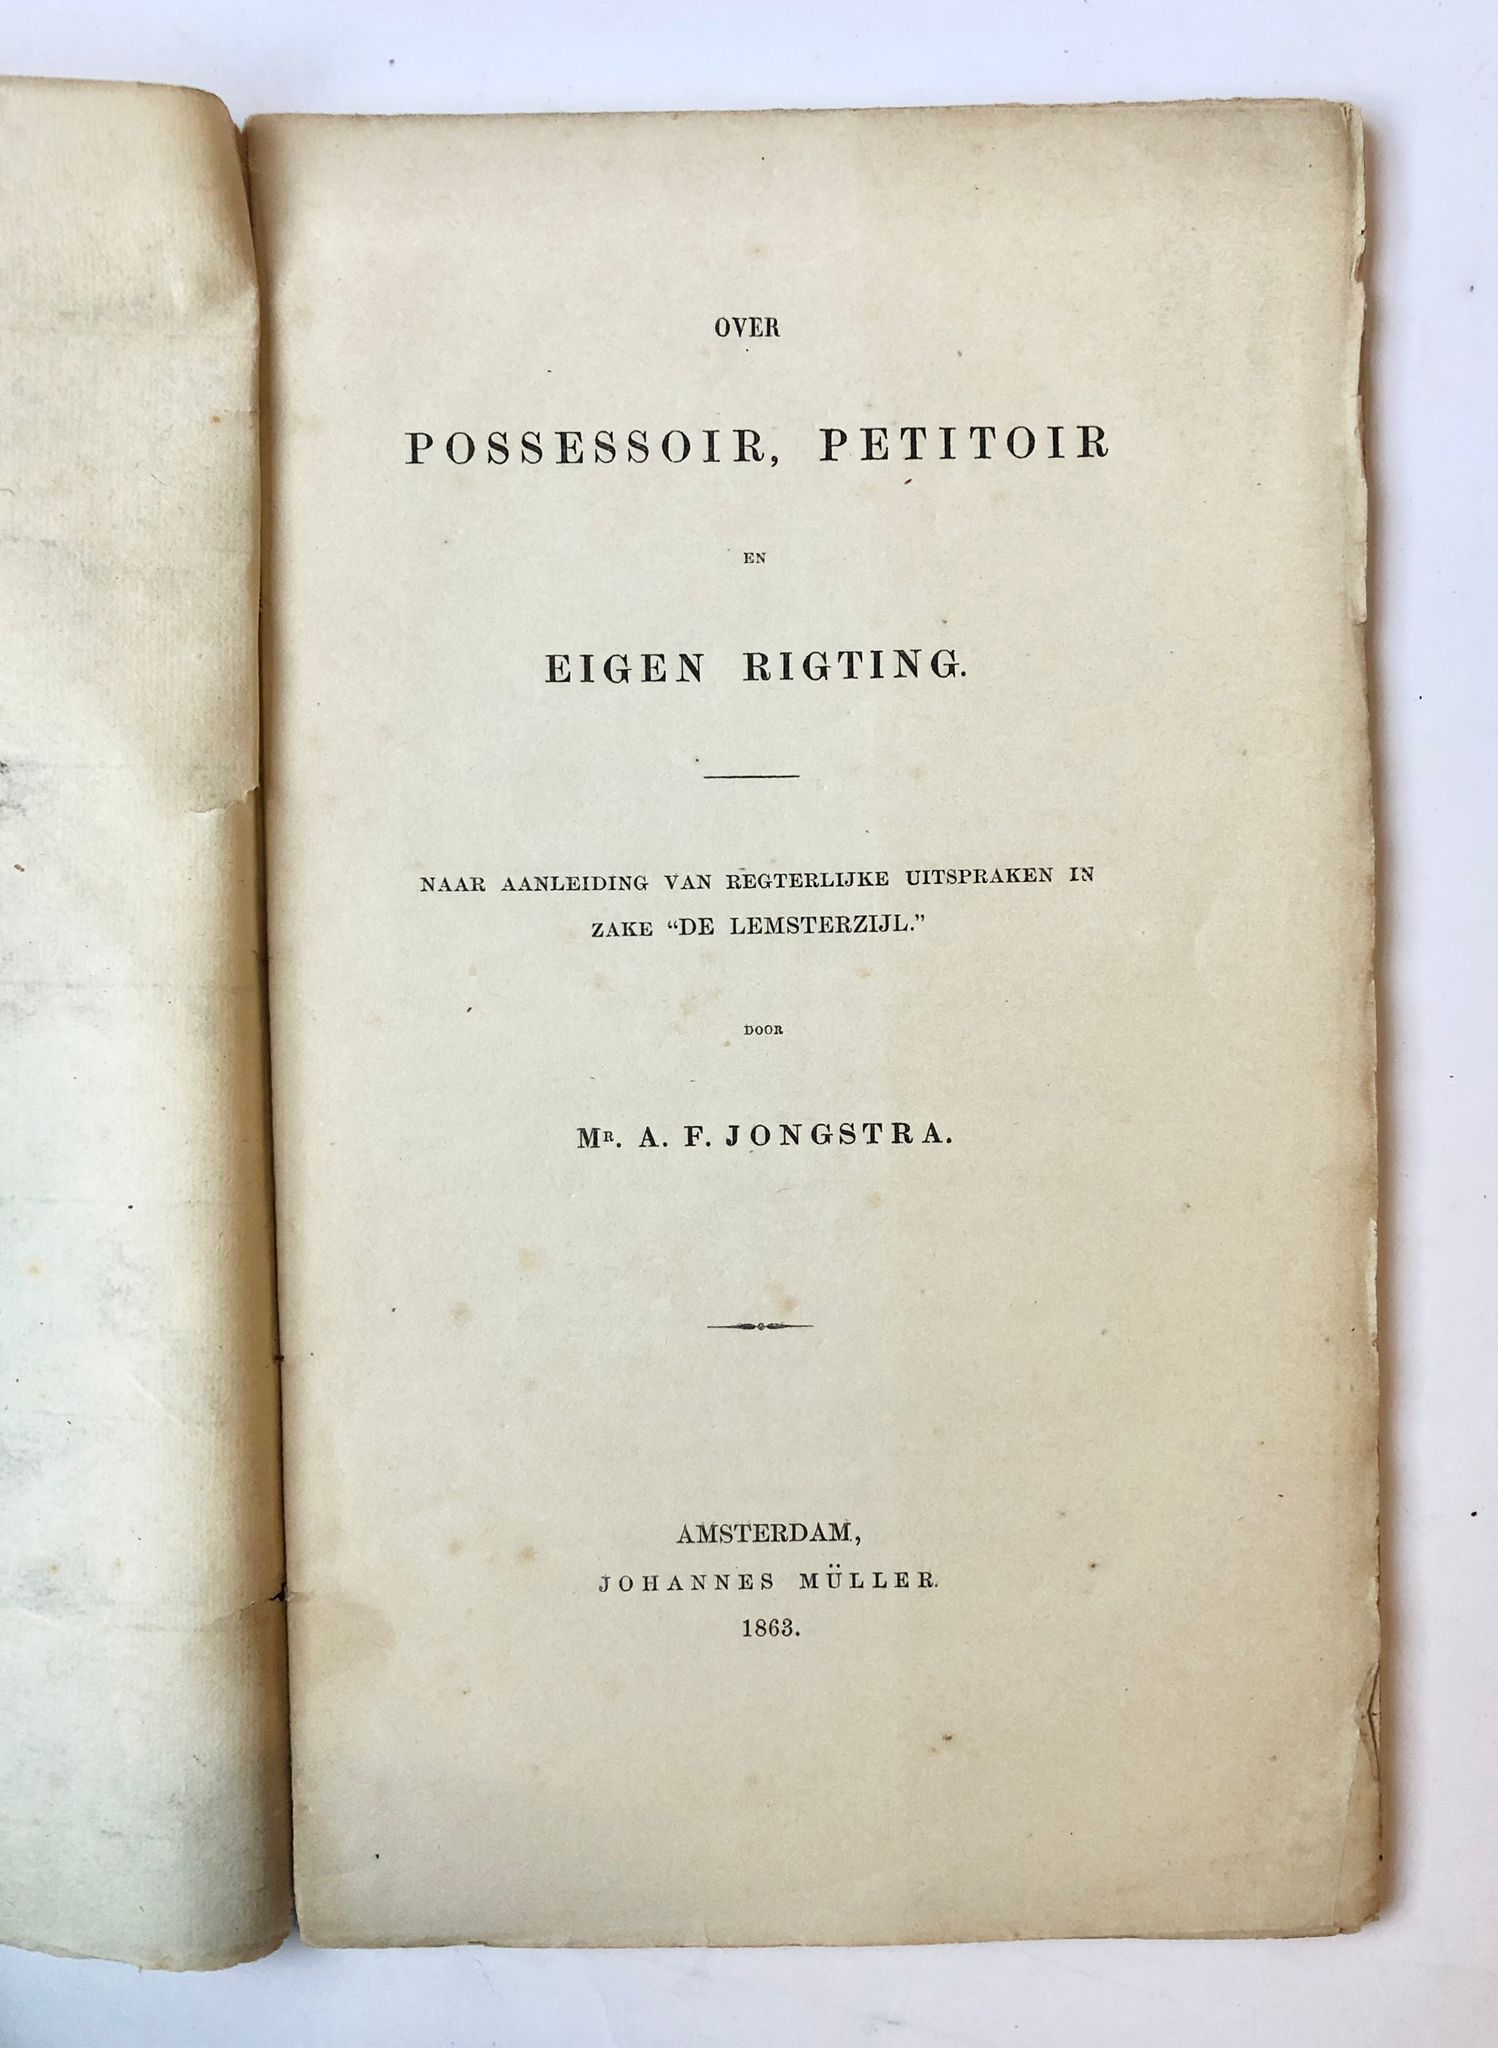 [Friesland, Lemmer, 1863] Over possessoir, petitoir en eigen rigting. Naar aanleiding van regterlijke uitsprakenin zake “De Lemsterzijl”, Johannes Müller, Amsterdam, Lemmer (Friesland), 1863, 66 pp.